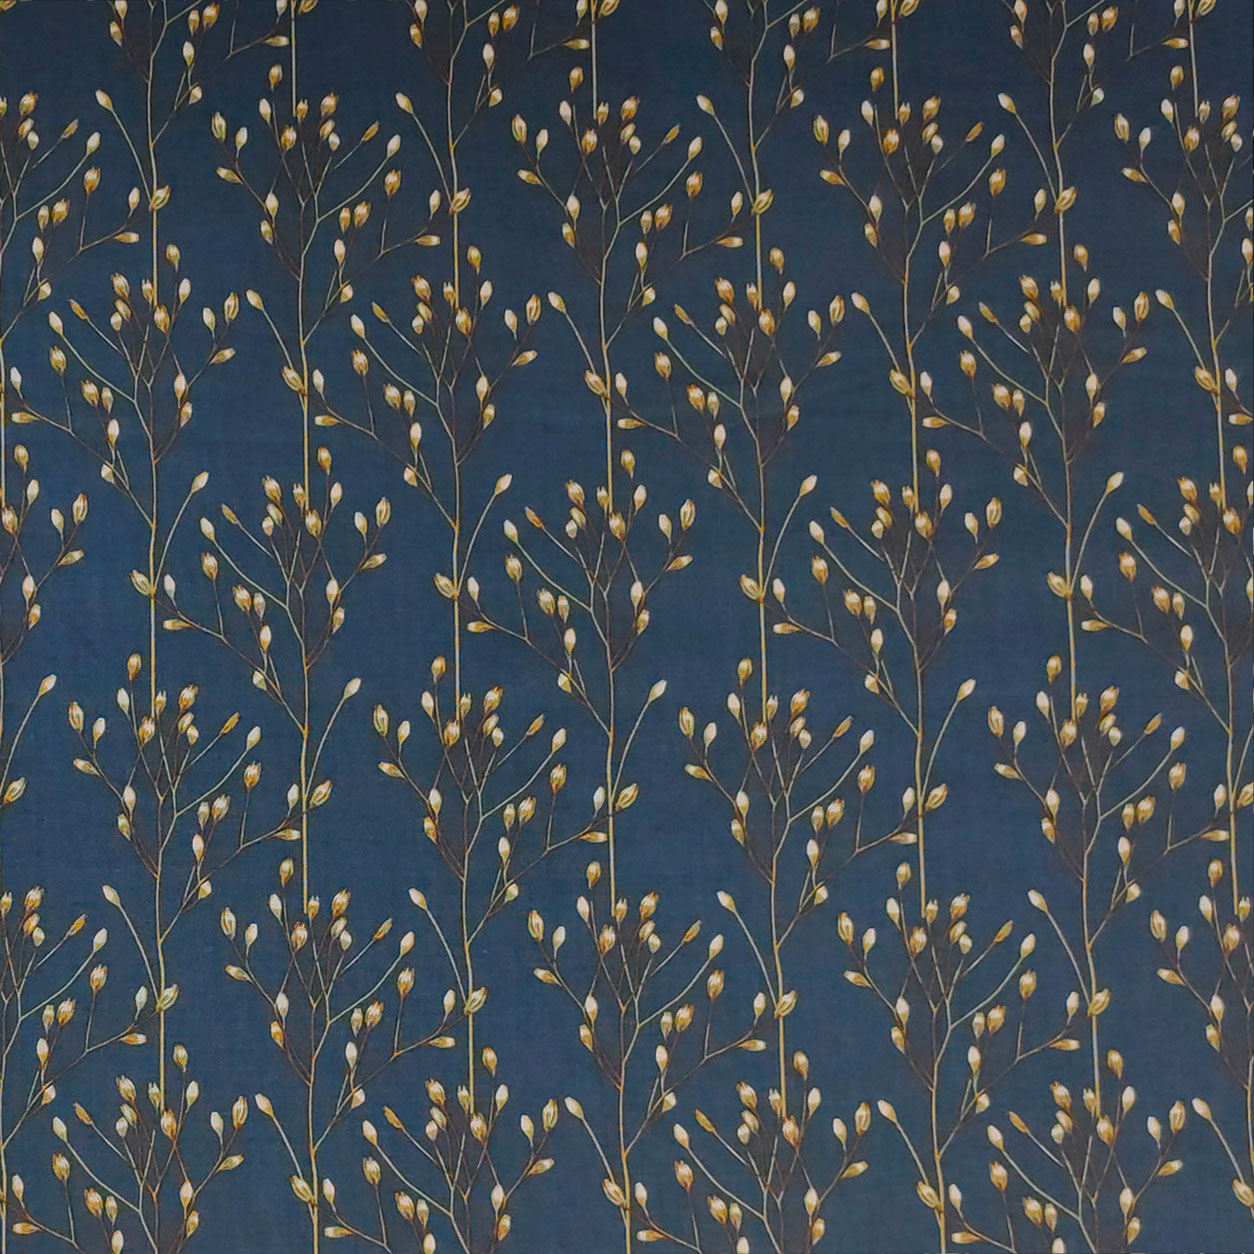 tessuto cotone gutermann ramoscelli floreali blu scuro